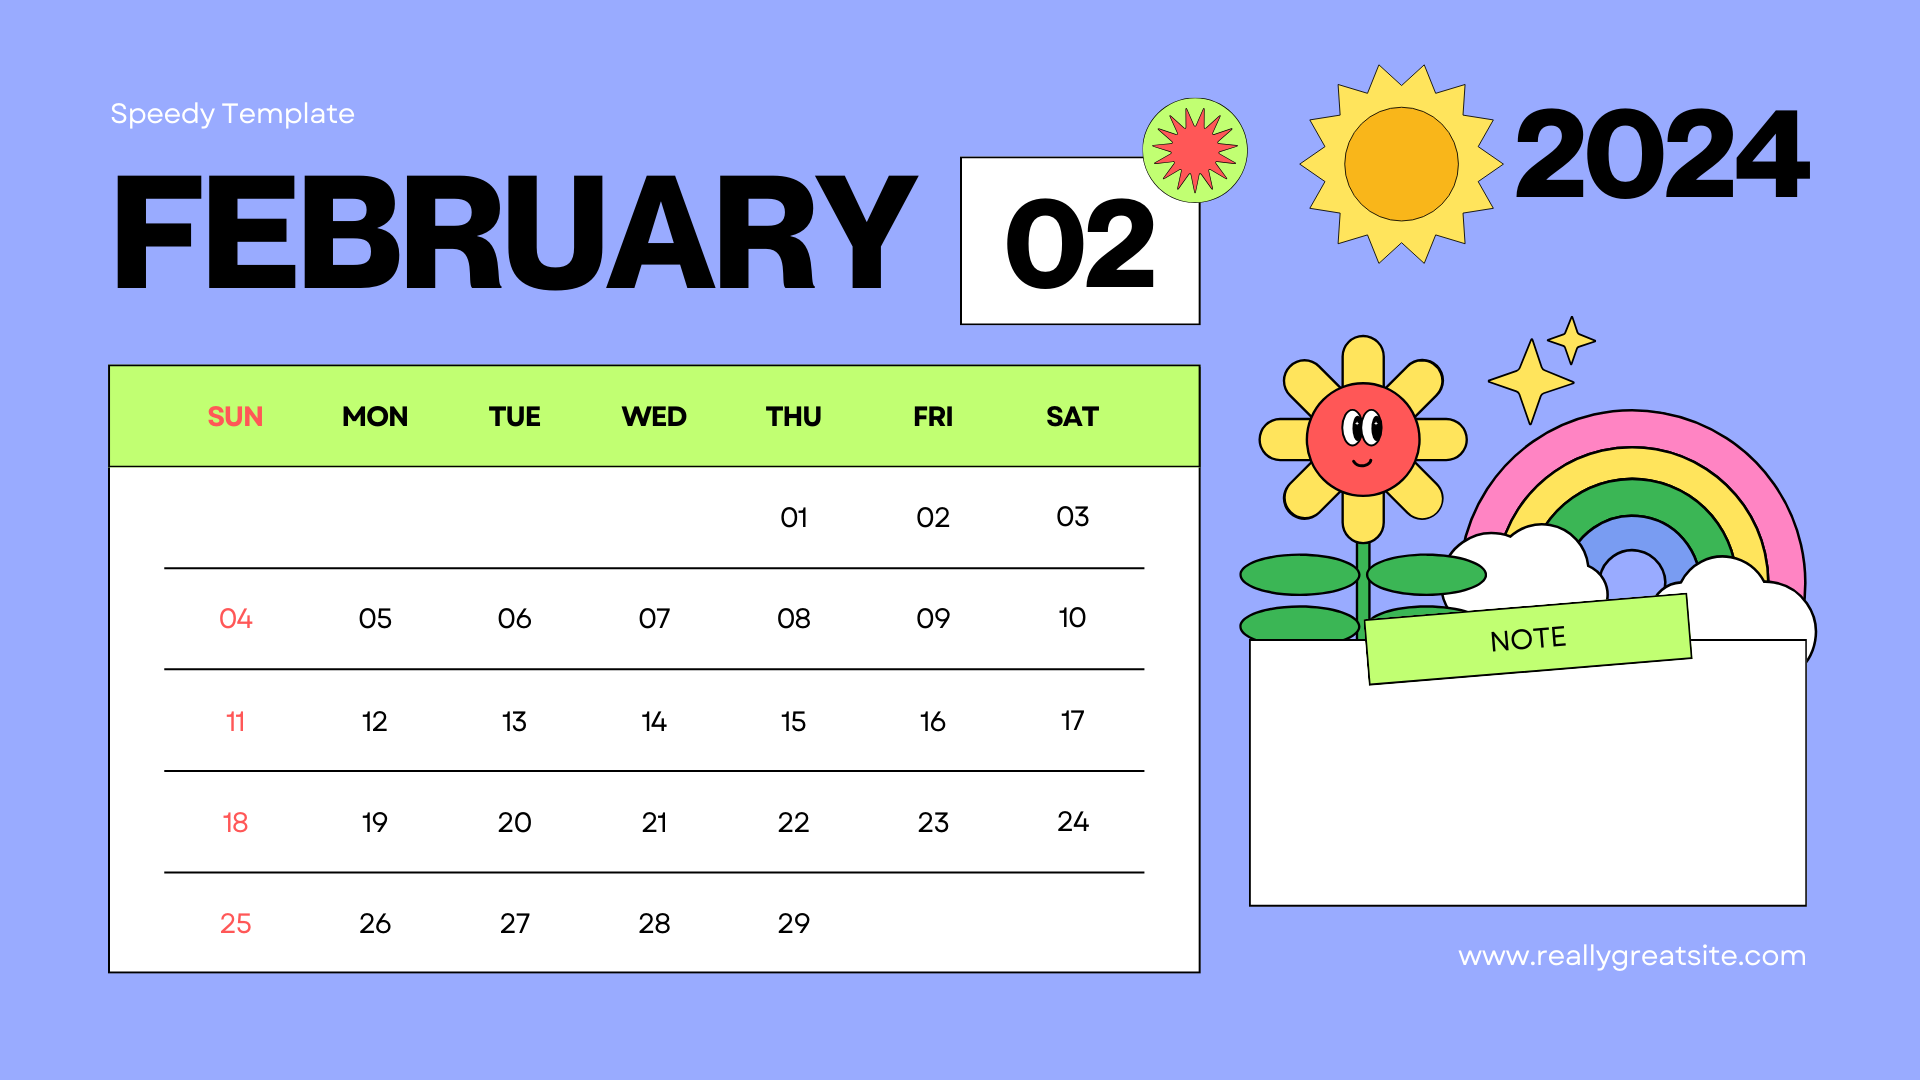 February 2024 Calendar Template Free Download Speedy Template